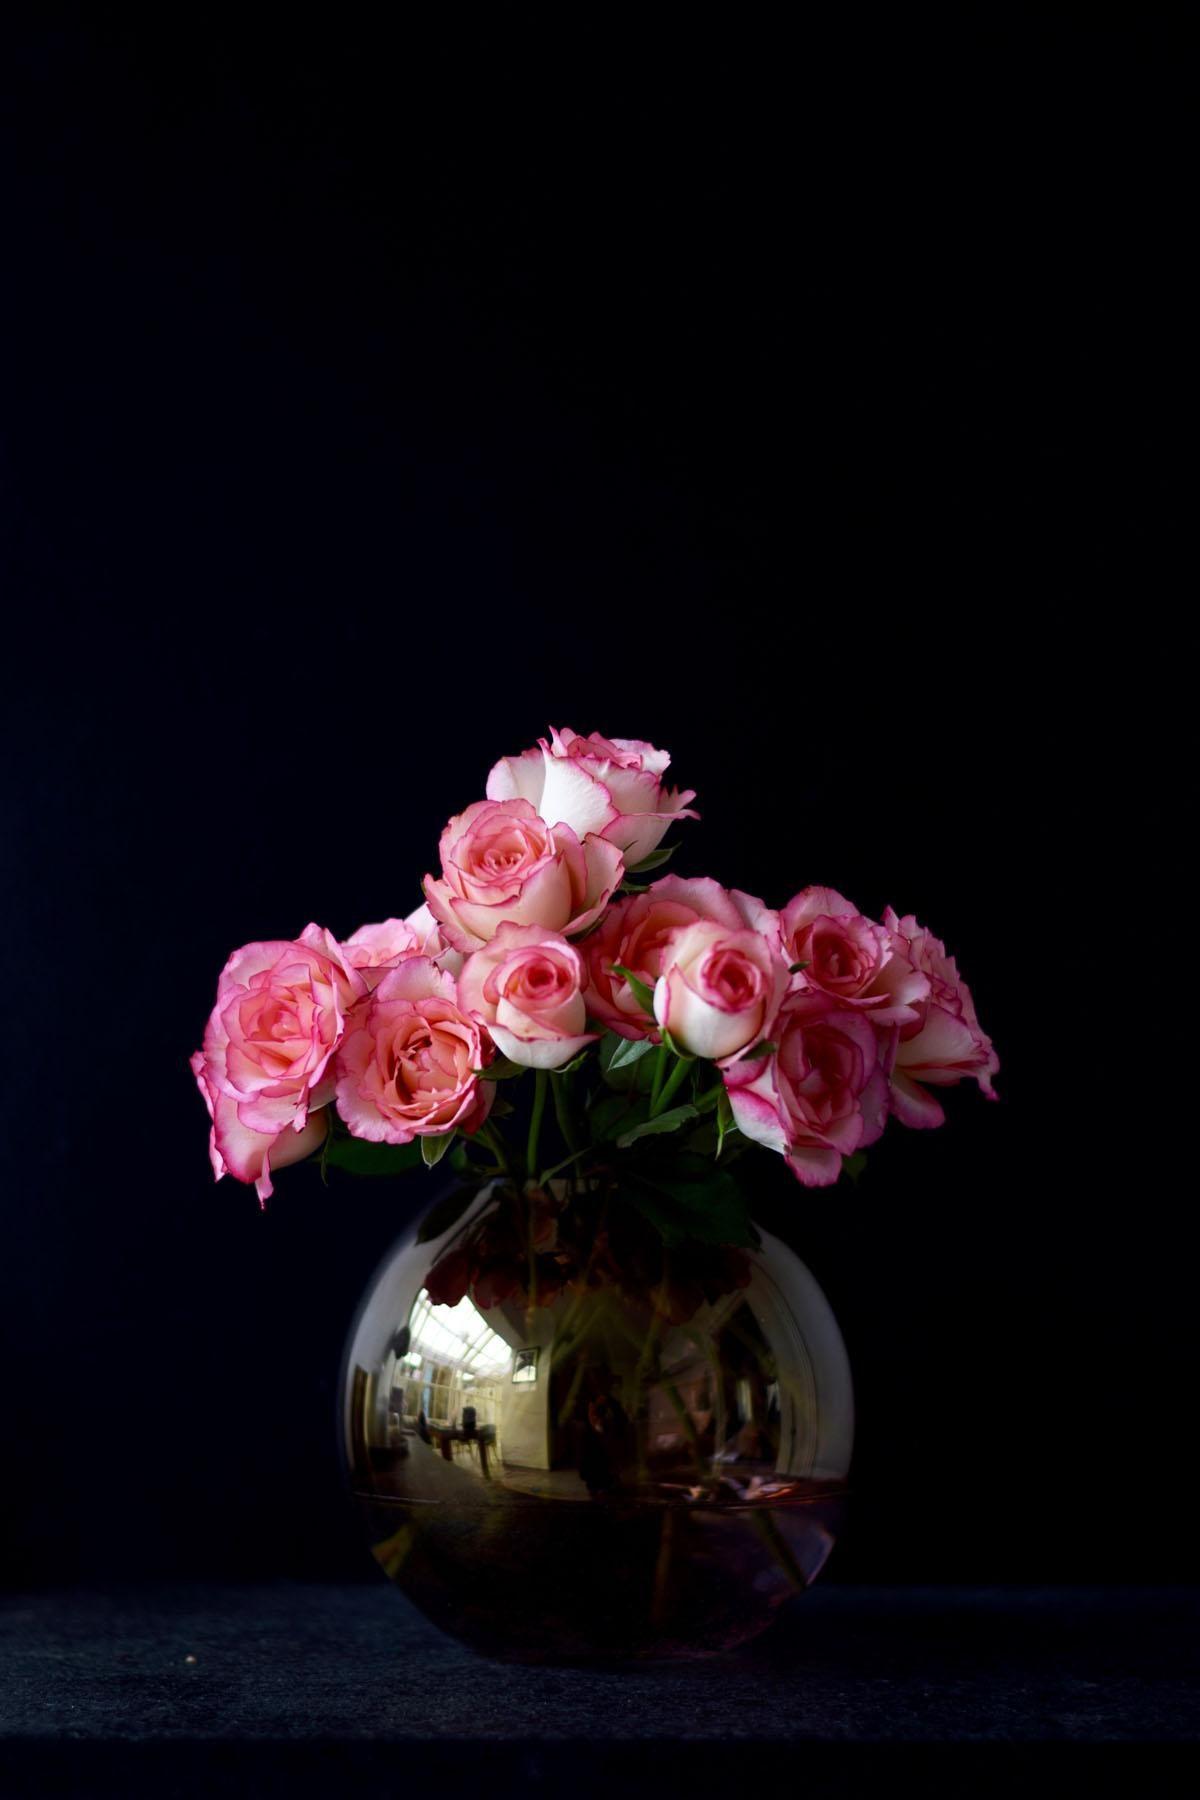 Rosen und dunkle Töne...
#moody #rosen #blumen #lsainternational